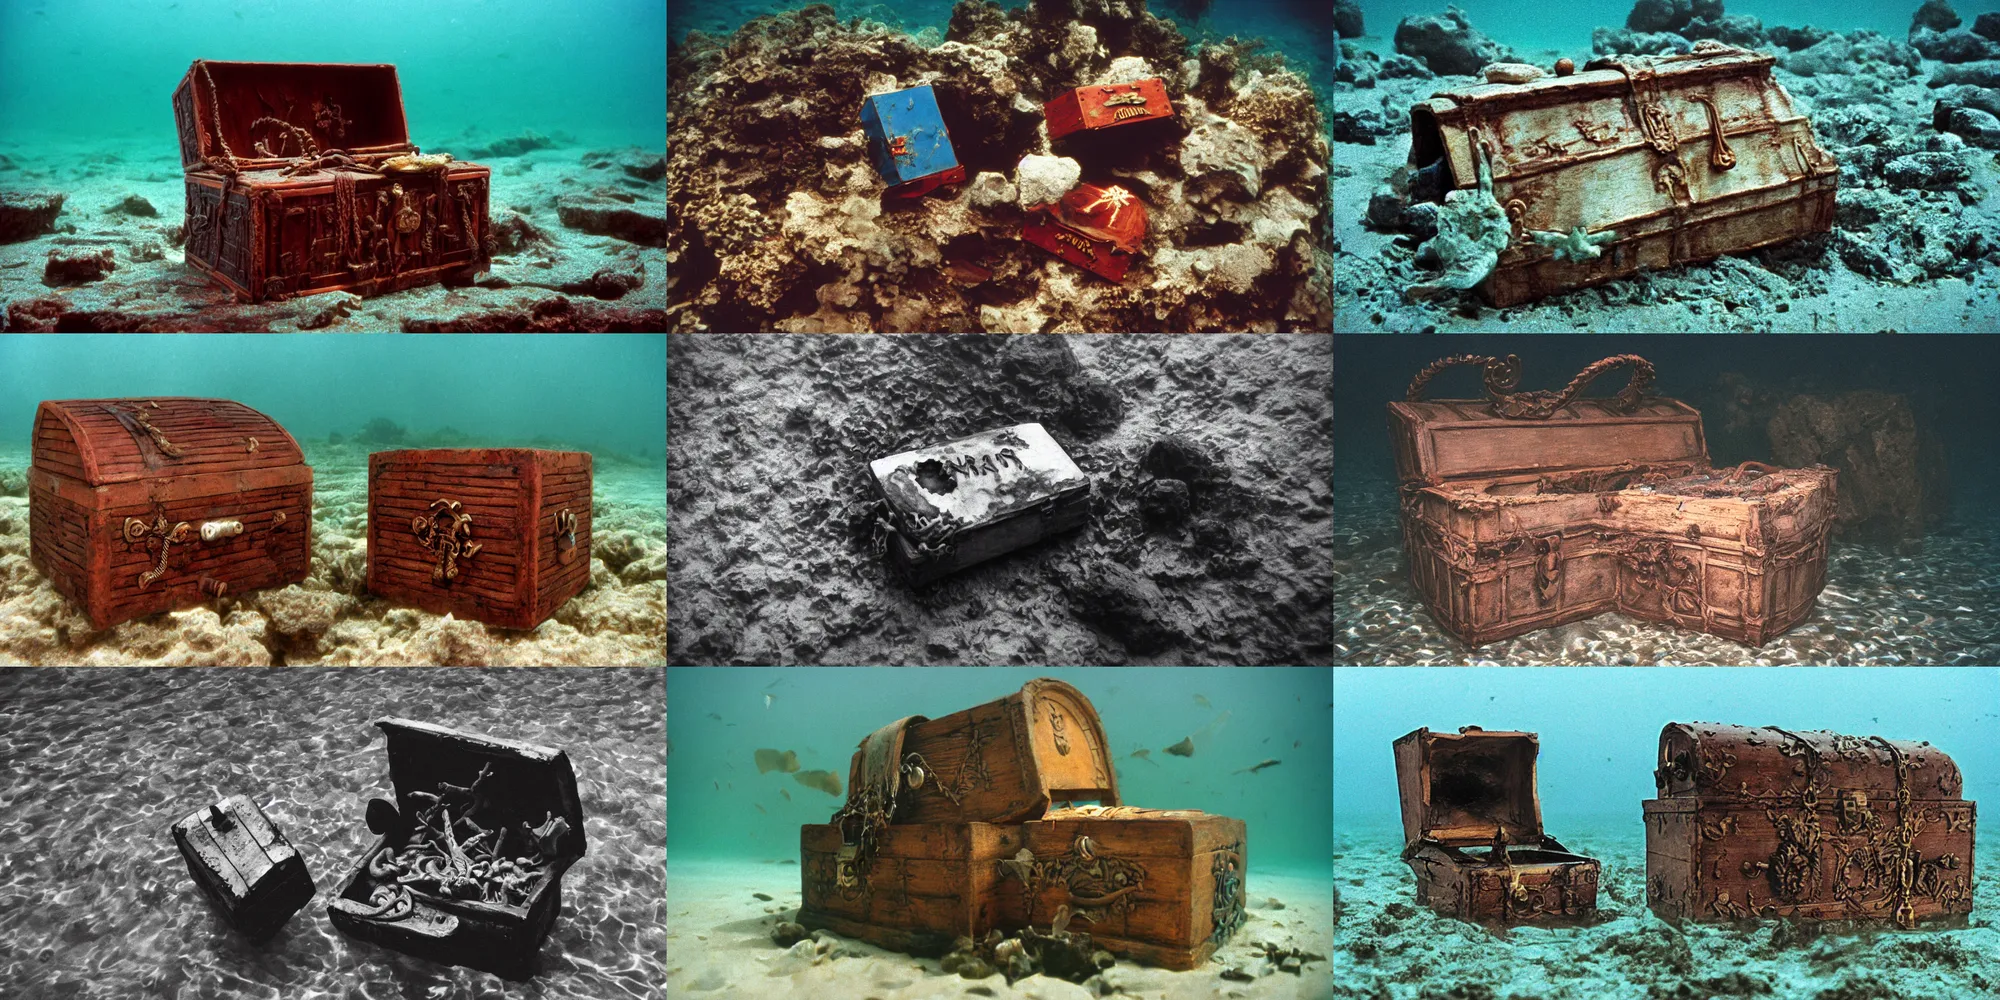 Prompt: strange pirate treasure chest under water holds an ancient curse evil surrounding it, cinestill 8 0 0 t, 1 9 8 0 s movie still, film grain